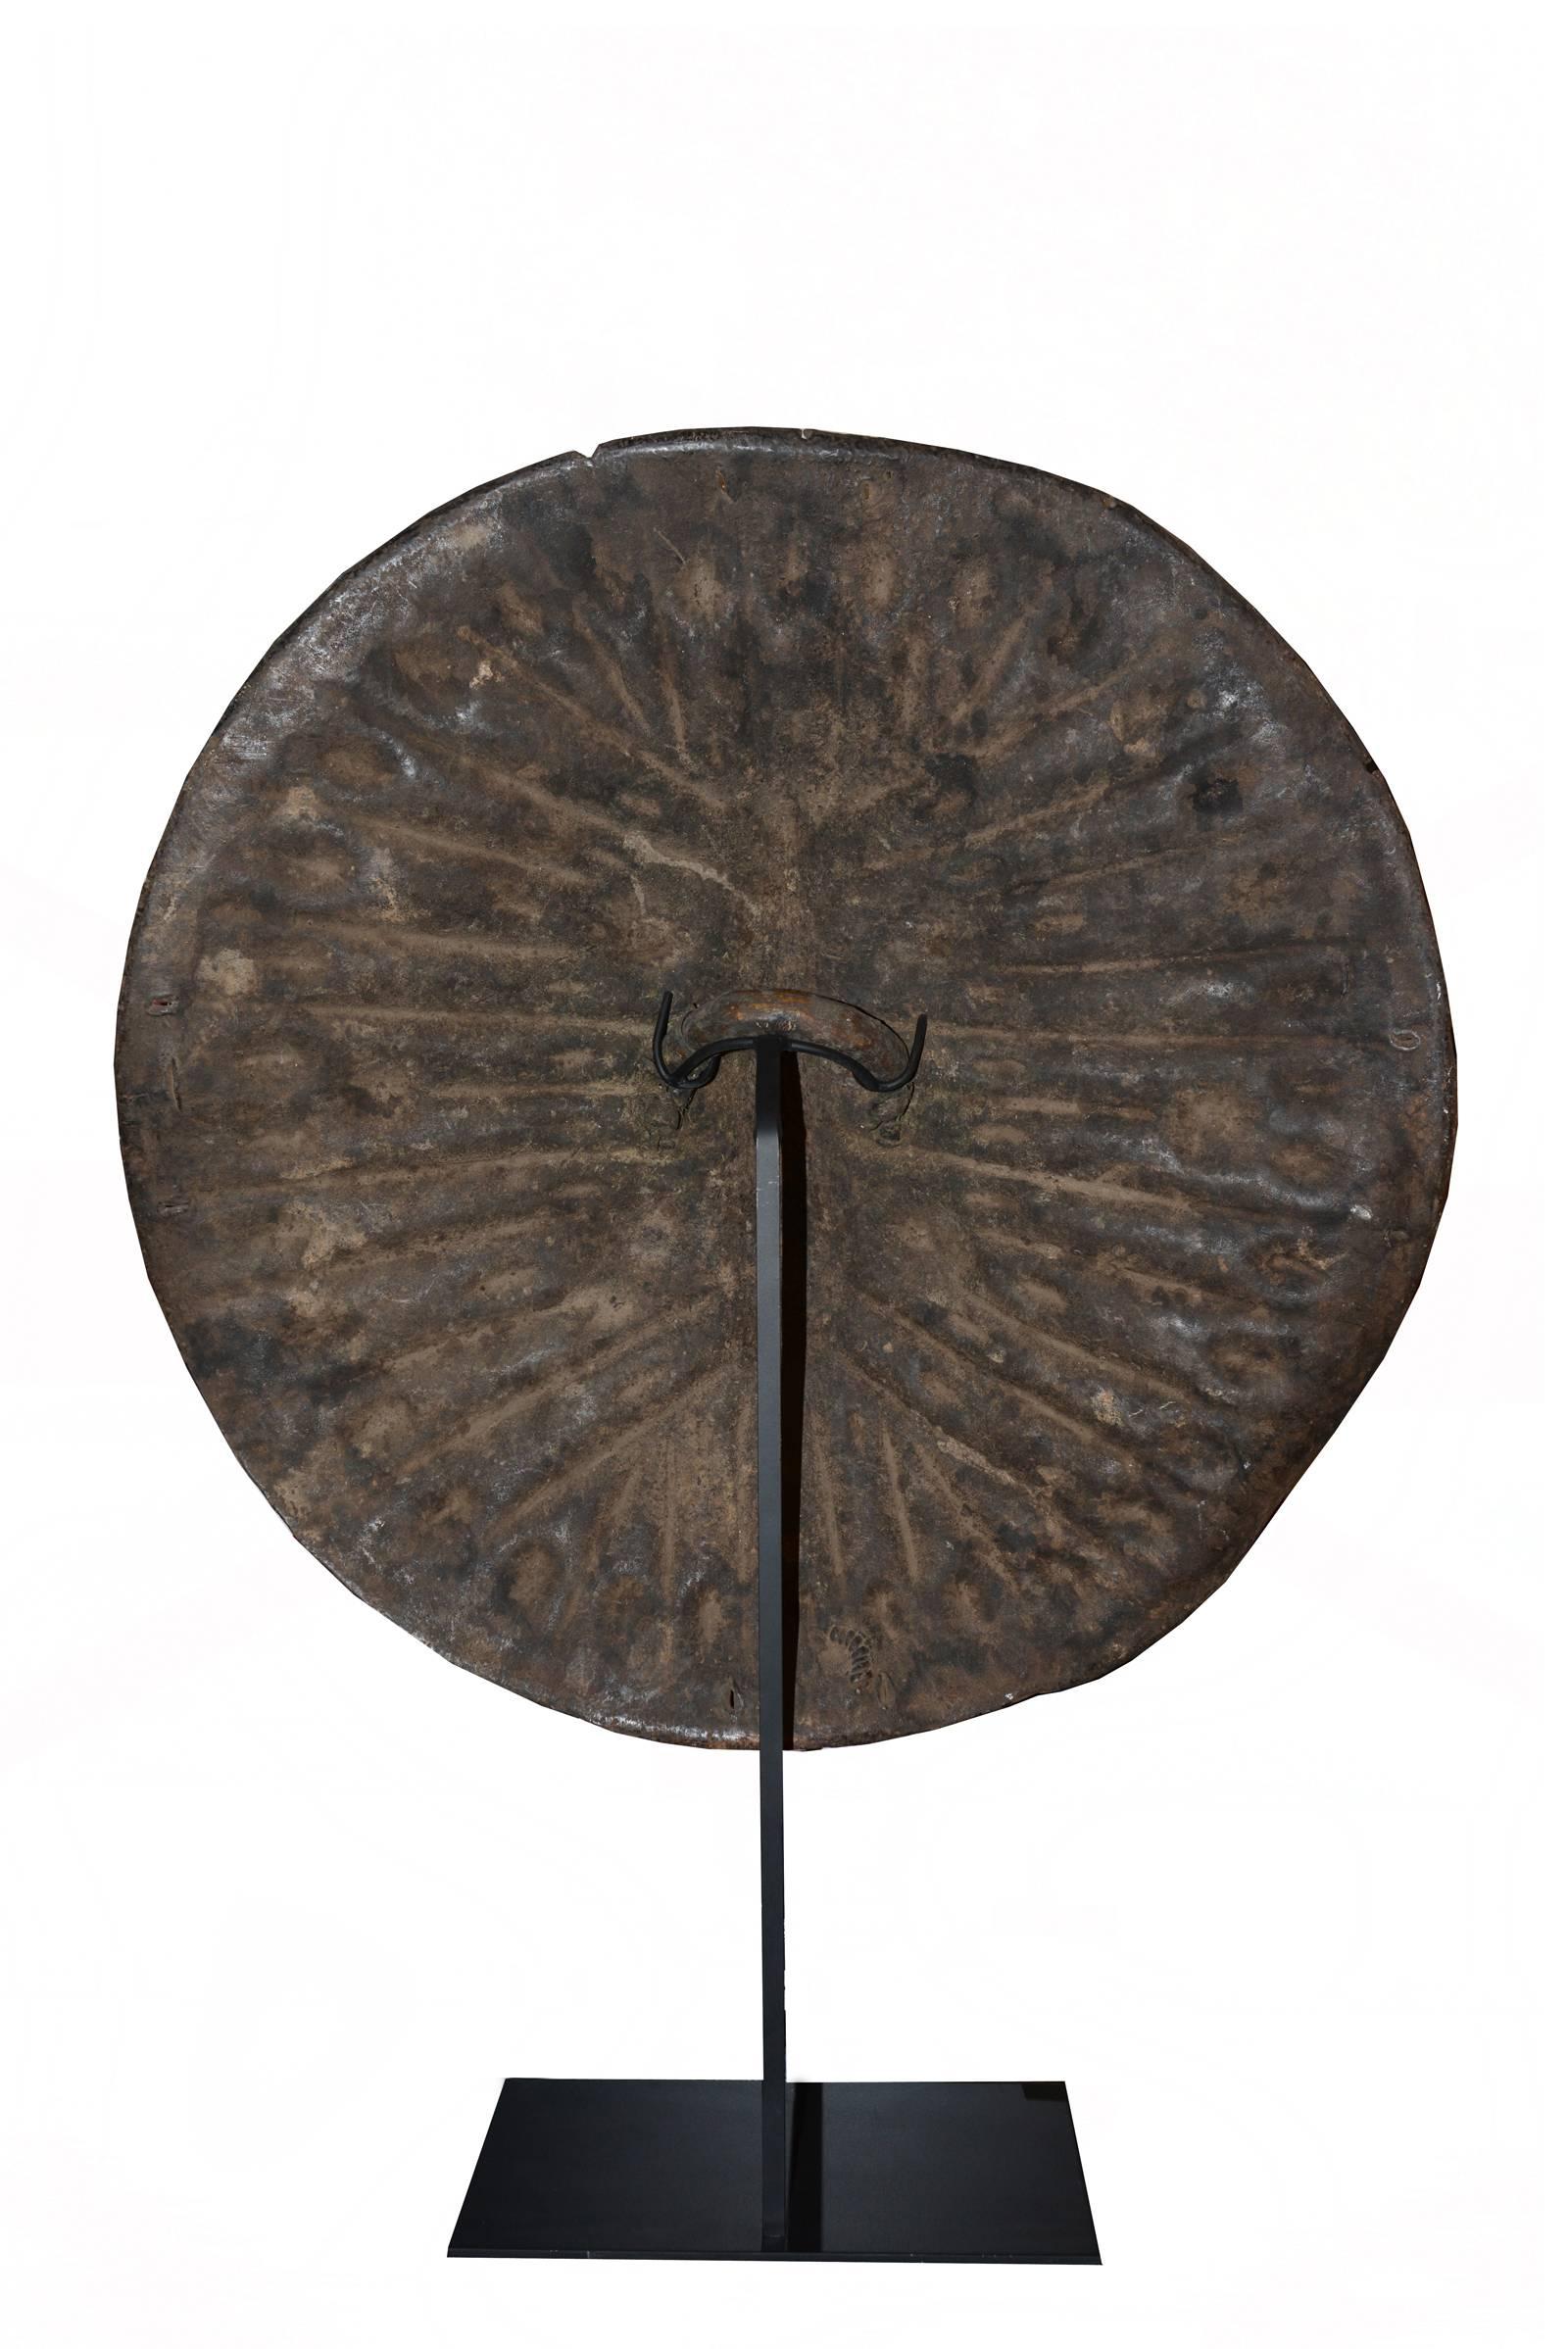 ethiopian shield